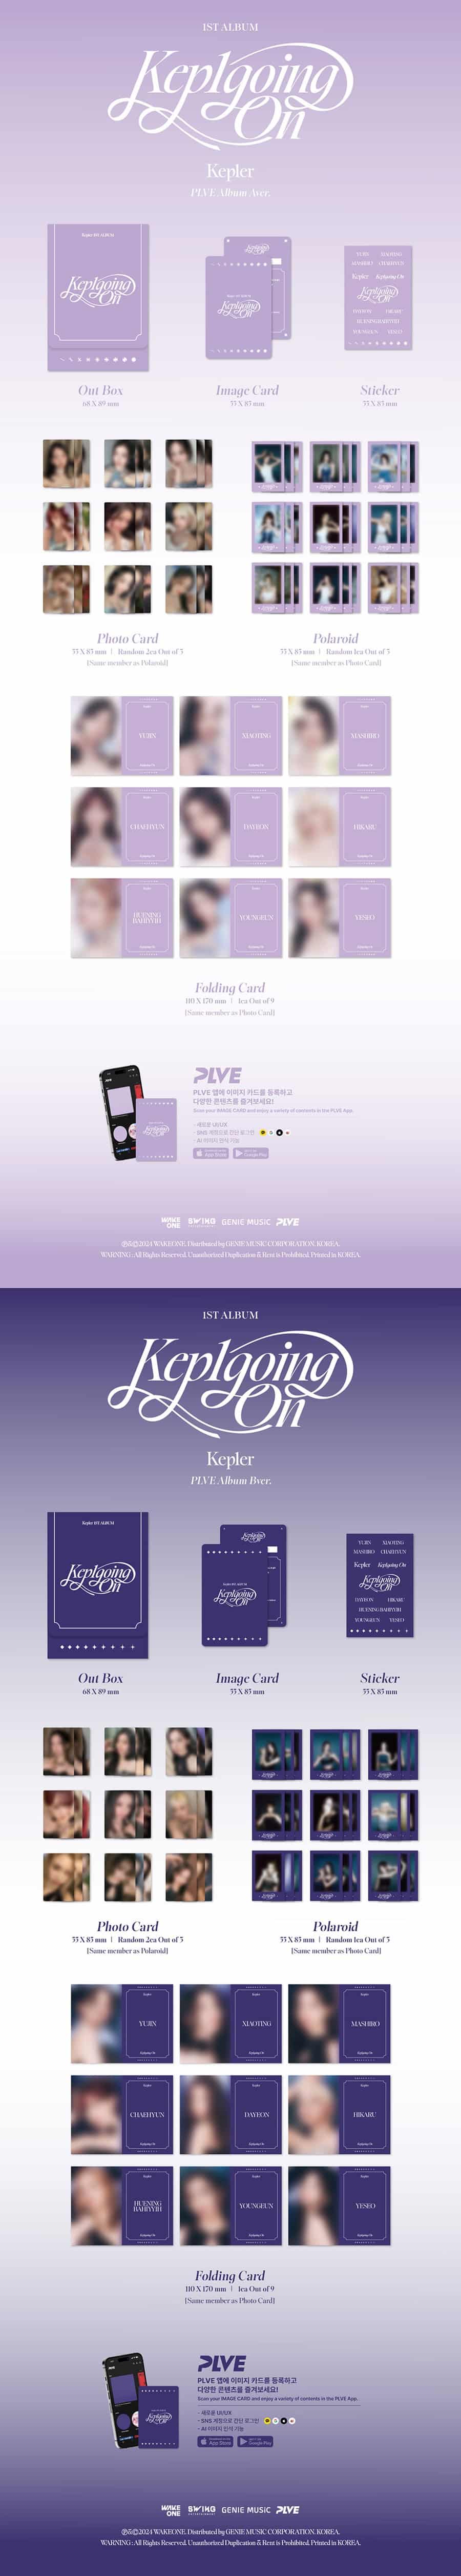 kep1er-1st-album-kep1going-on-plve-ver-wholesales